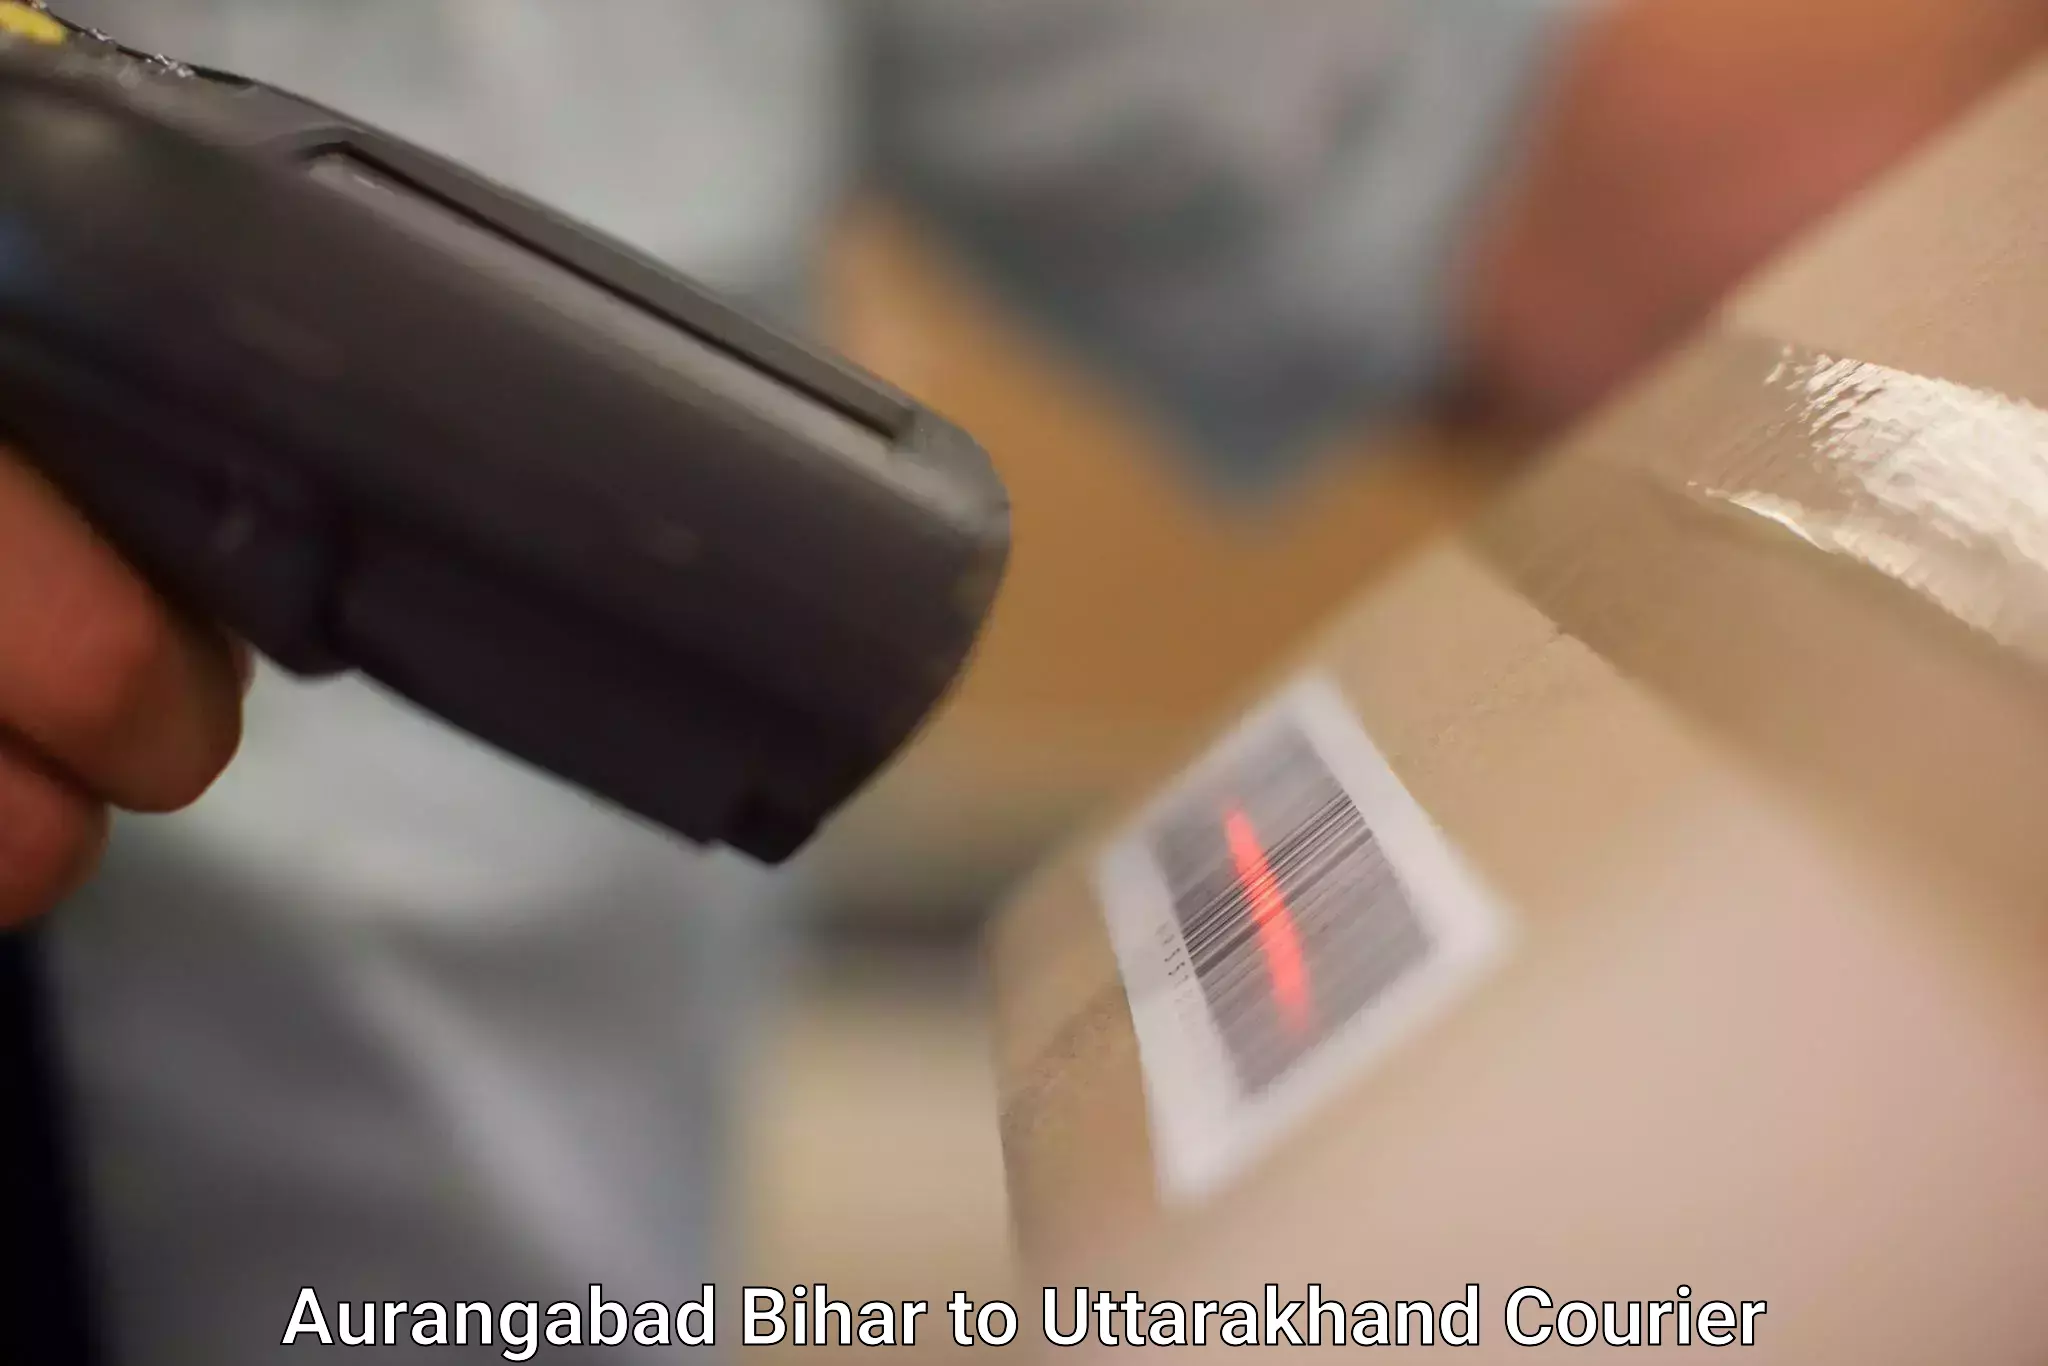 Ocean freight courier Aurangabad Bihar to Uttarakhand